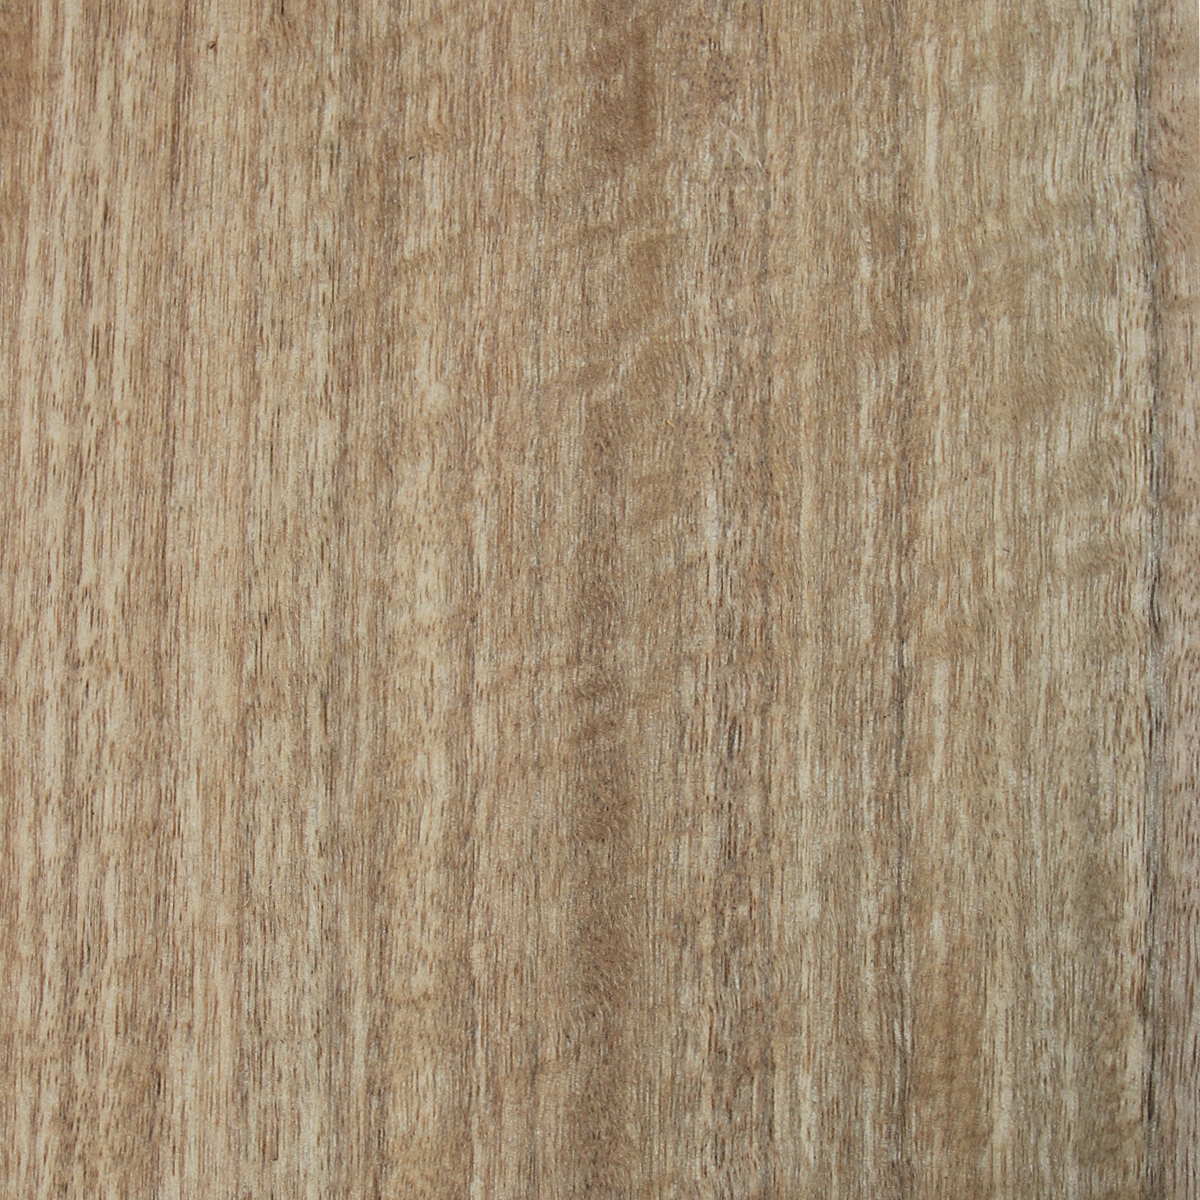 Spotted Gum (Quarter) - Timber Veneer & Plywood Species